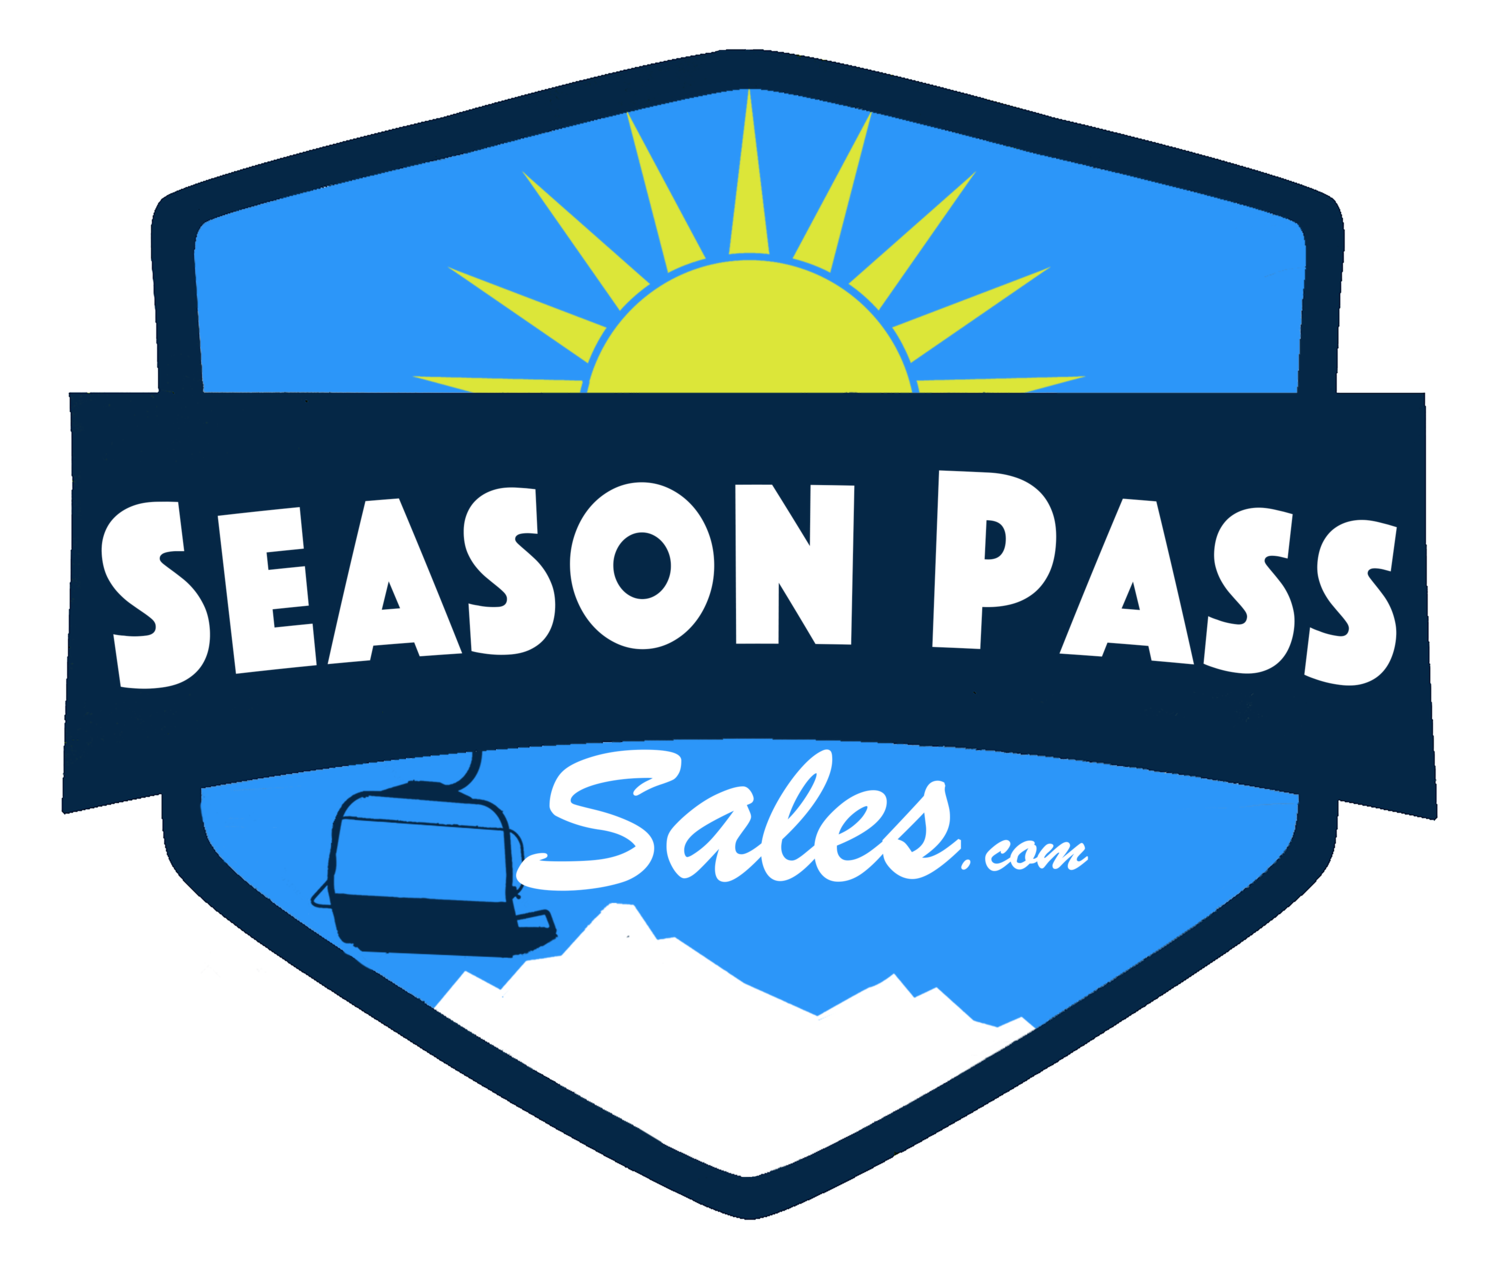 Season Pass Sales